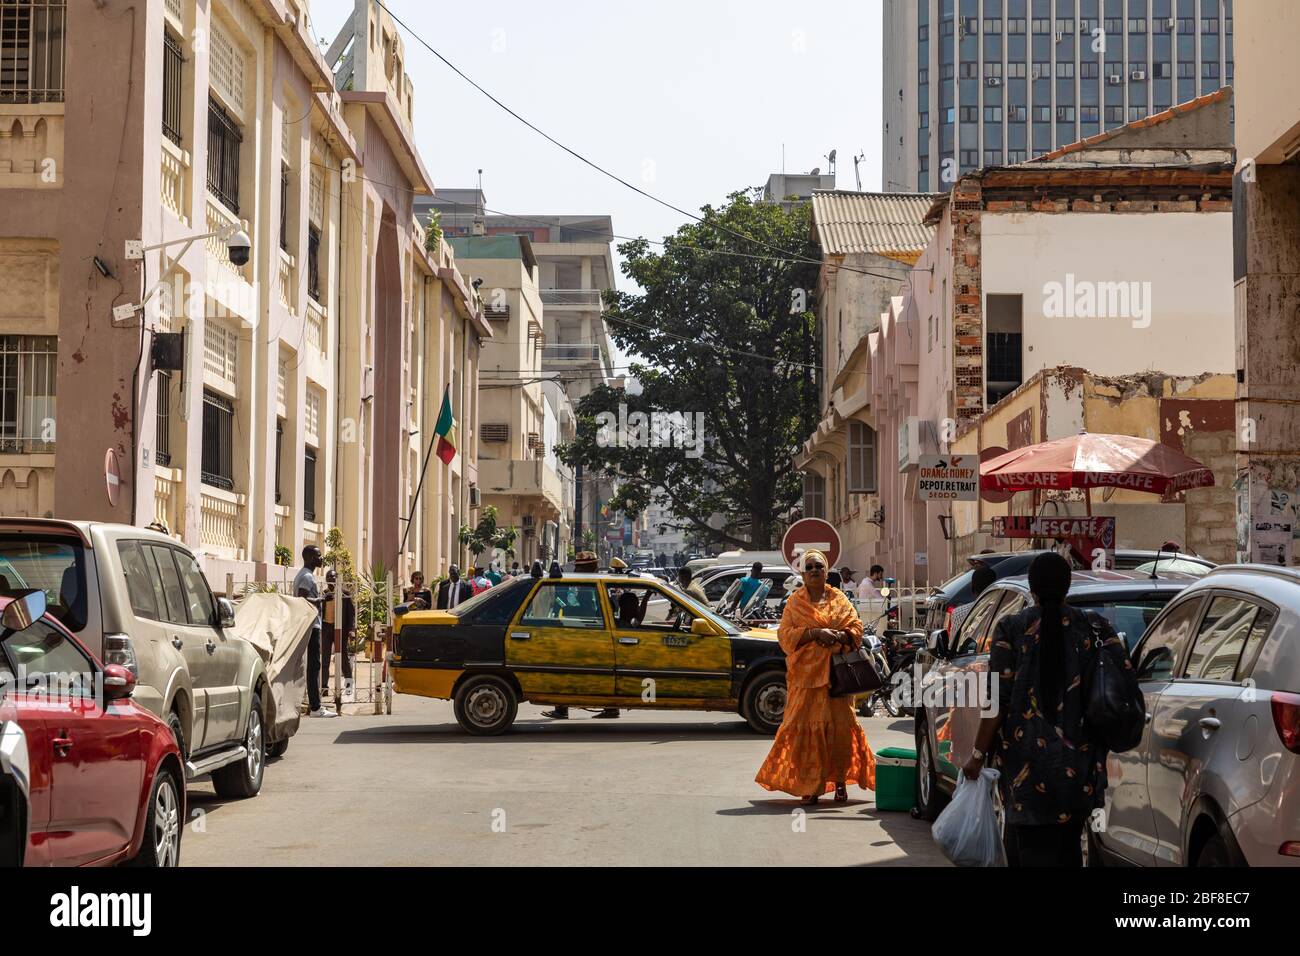 DAKAR, SENEGAL - NOVEMBER 11, 2019: People working and traffic at Senegal capital Dakar, West Africa. Stock Photo